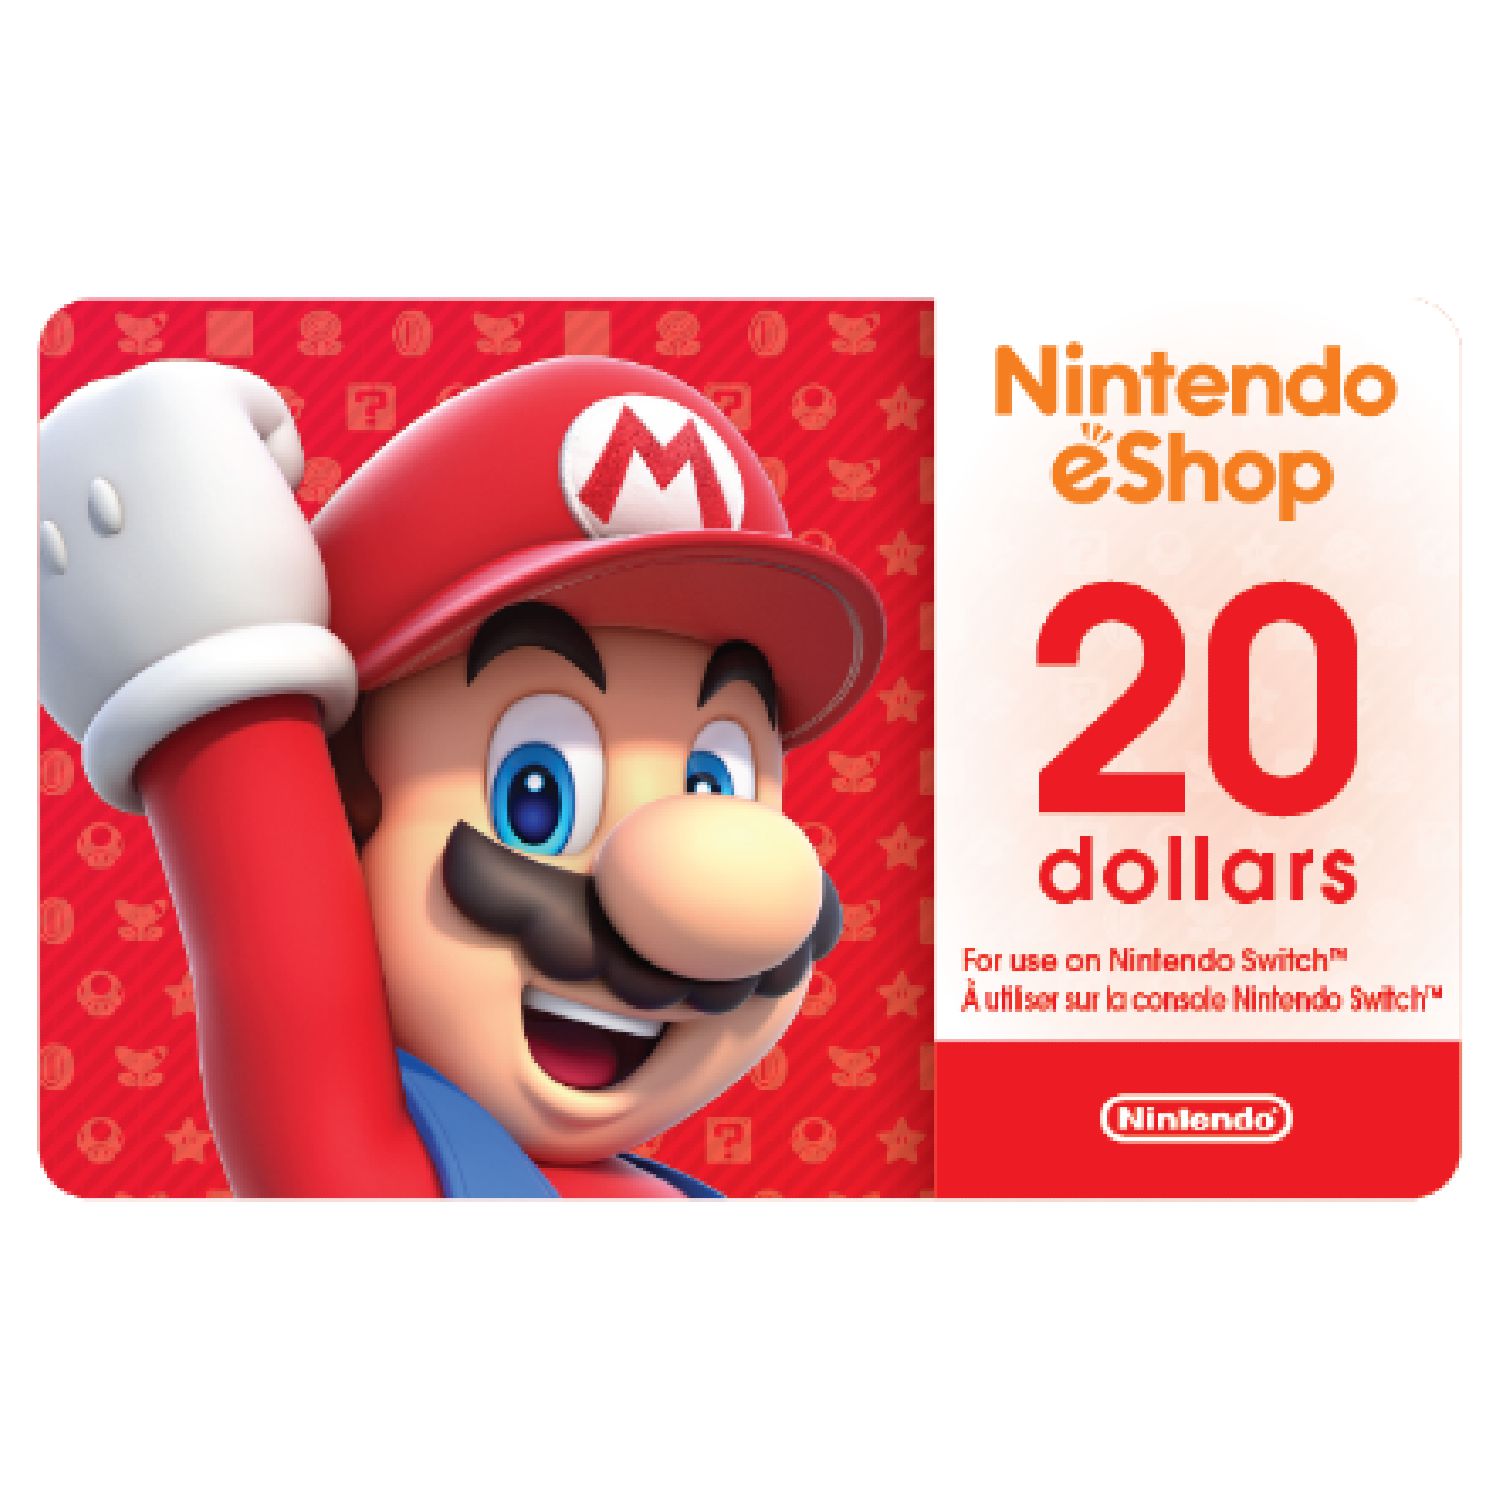 Carte Nintendo eshop [Obtenez une carte-cadeau Nintendo gratuite]